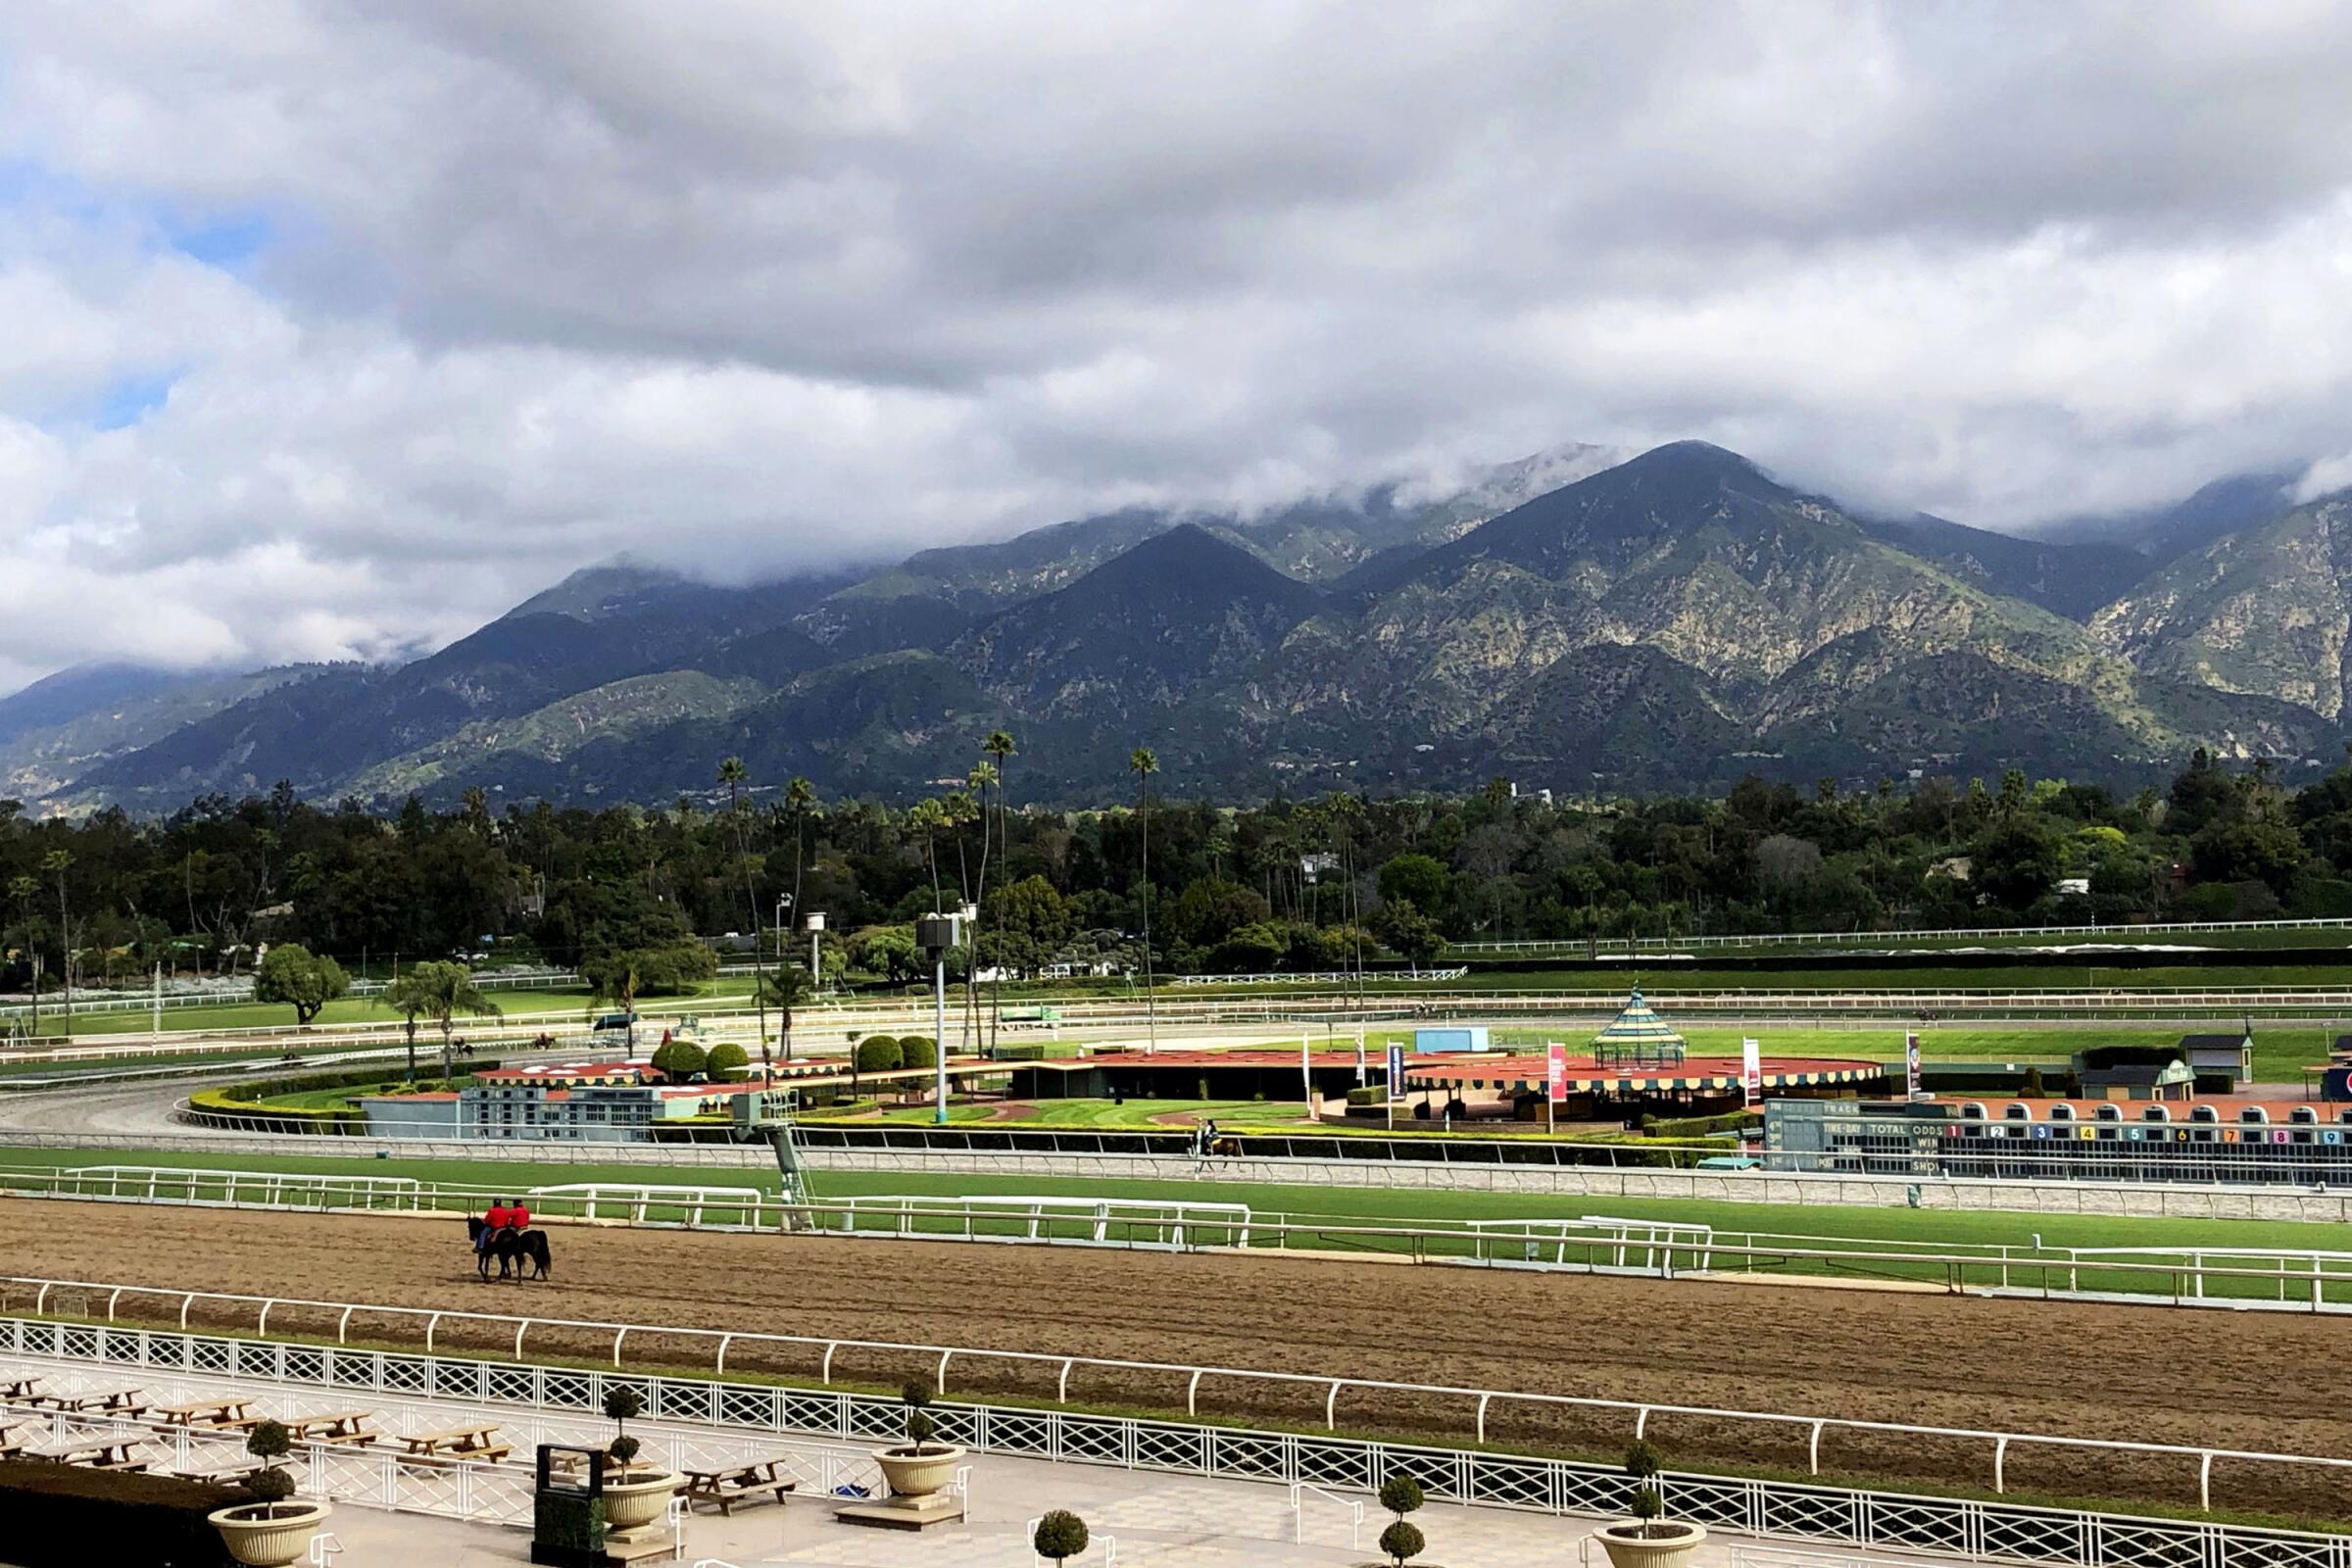 A wide view of the track at Santa Anita Park.